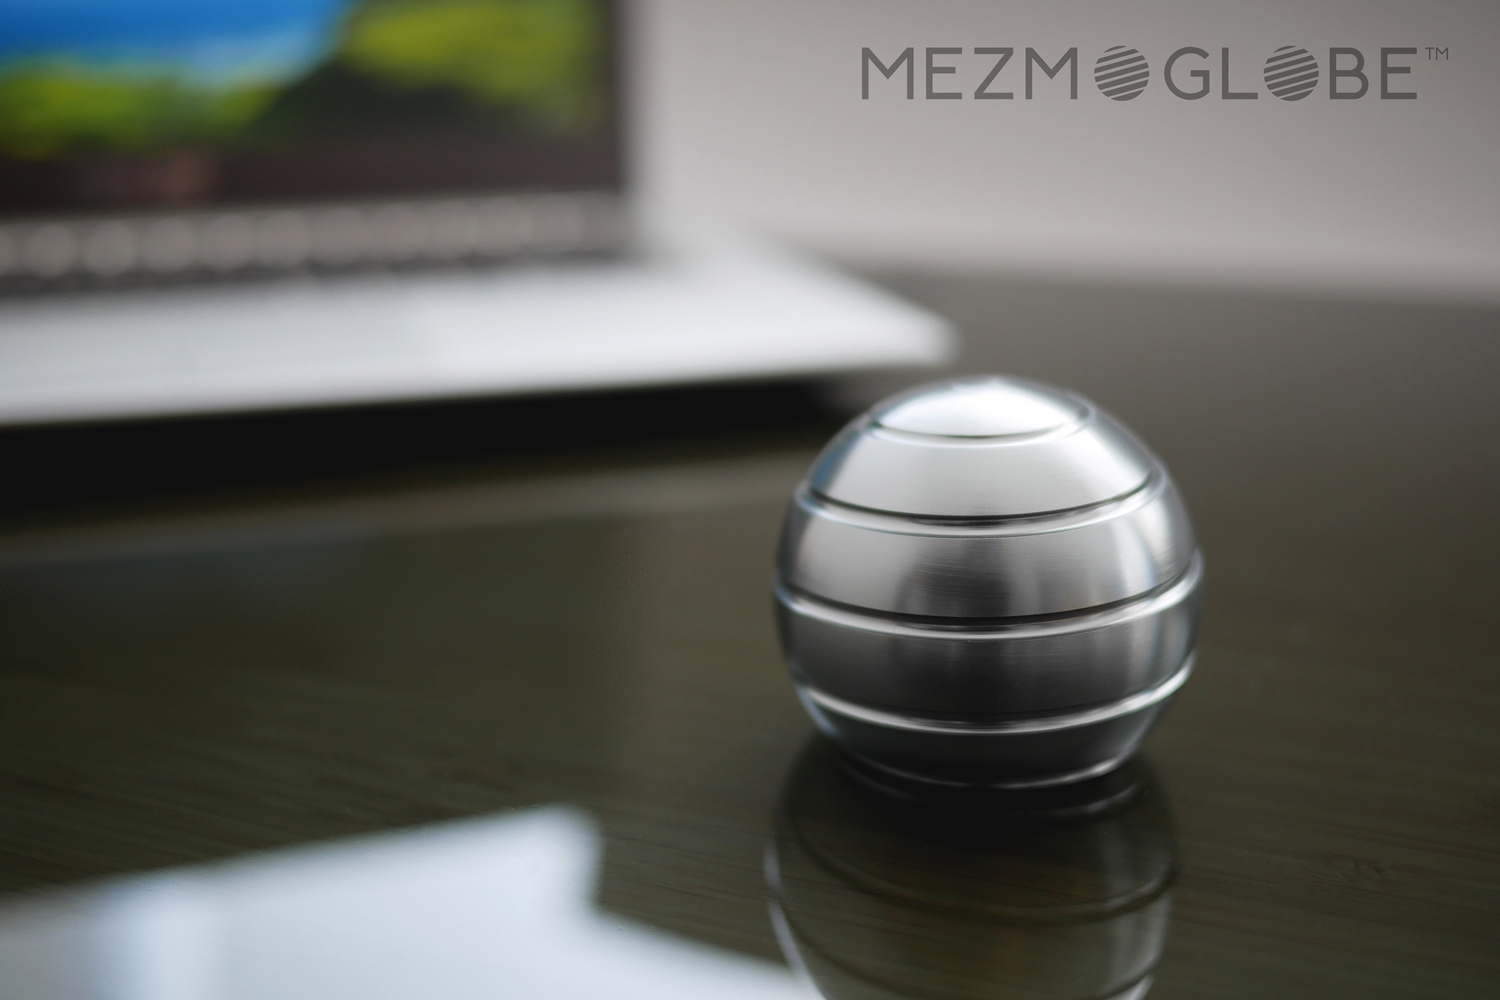 mezmoglobe spinning desk toy kickstarter globe3